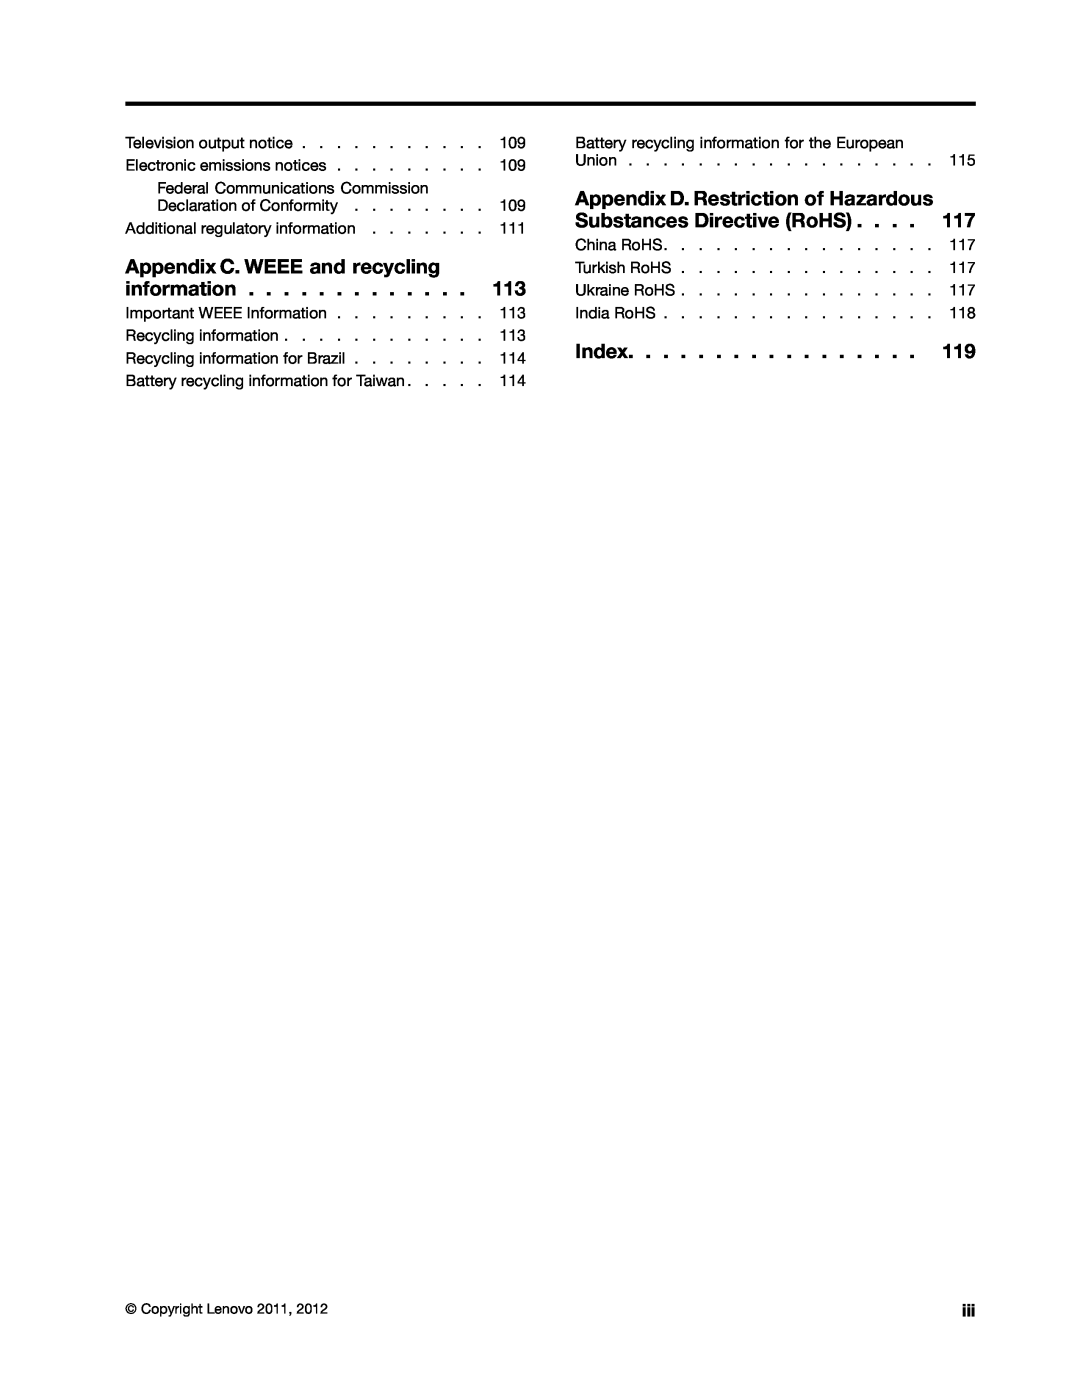 Lenovo 1994 Appendix C. WEEE and recycling information, Appendix D. Restriction of Hazardous Substances Directive RoHS 